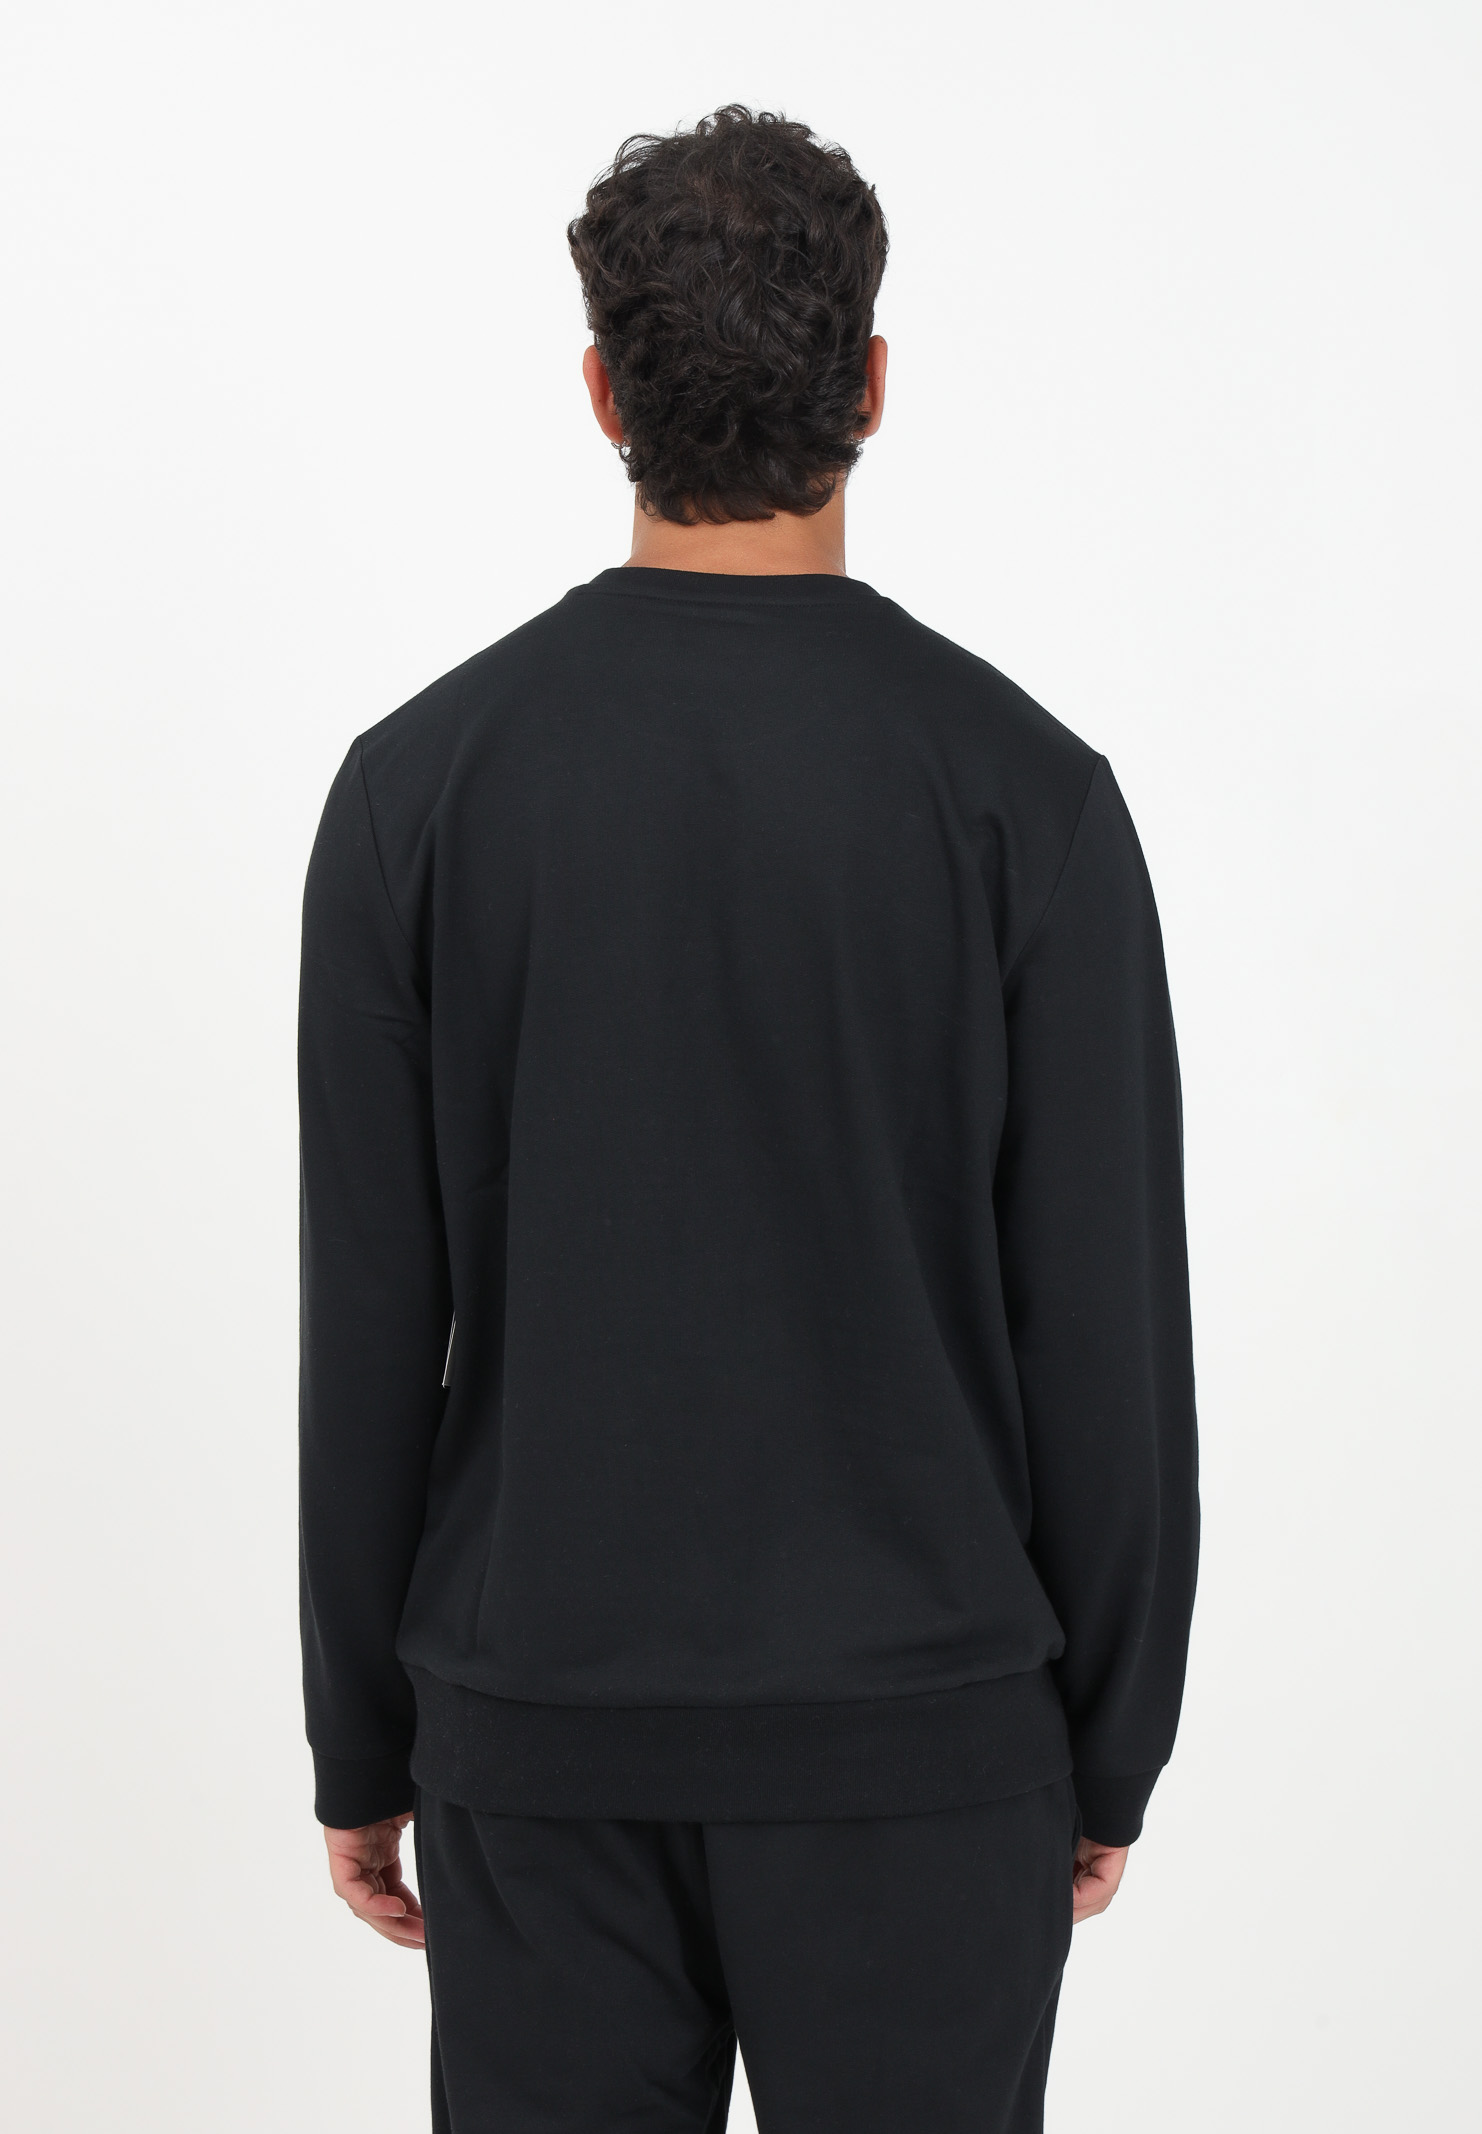 Black crewneck sweatshirt for men with logo print along the arm RALPH LAUREN | 714899617003.